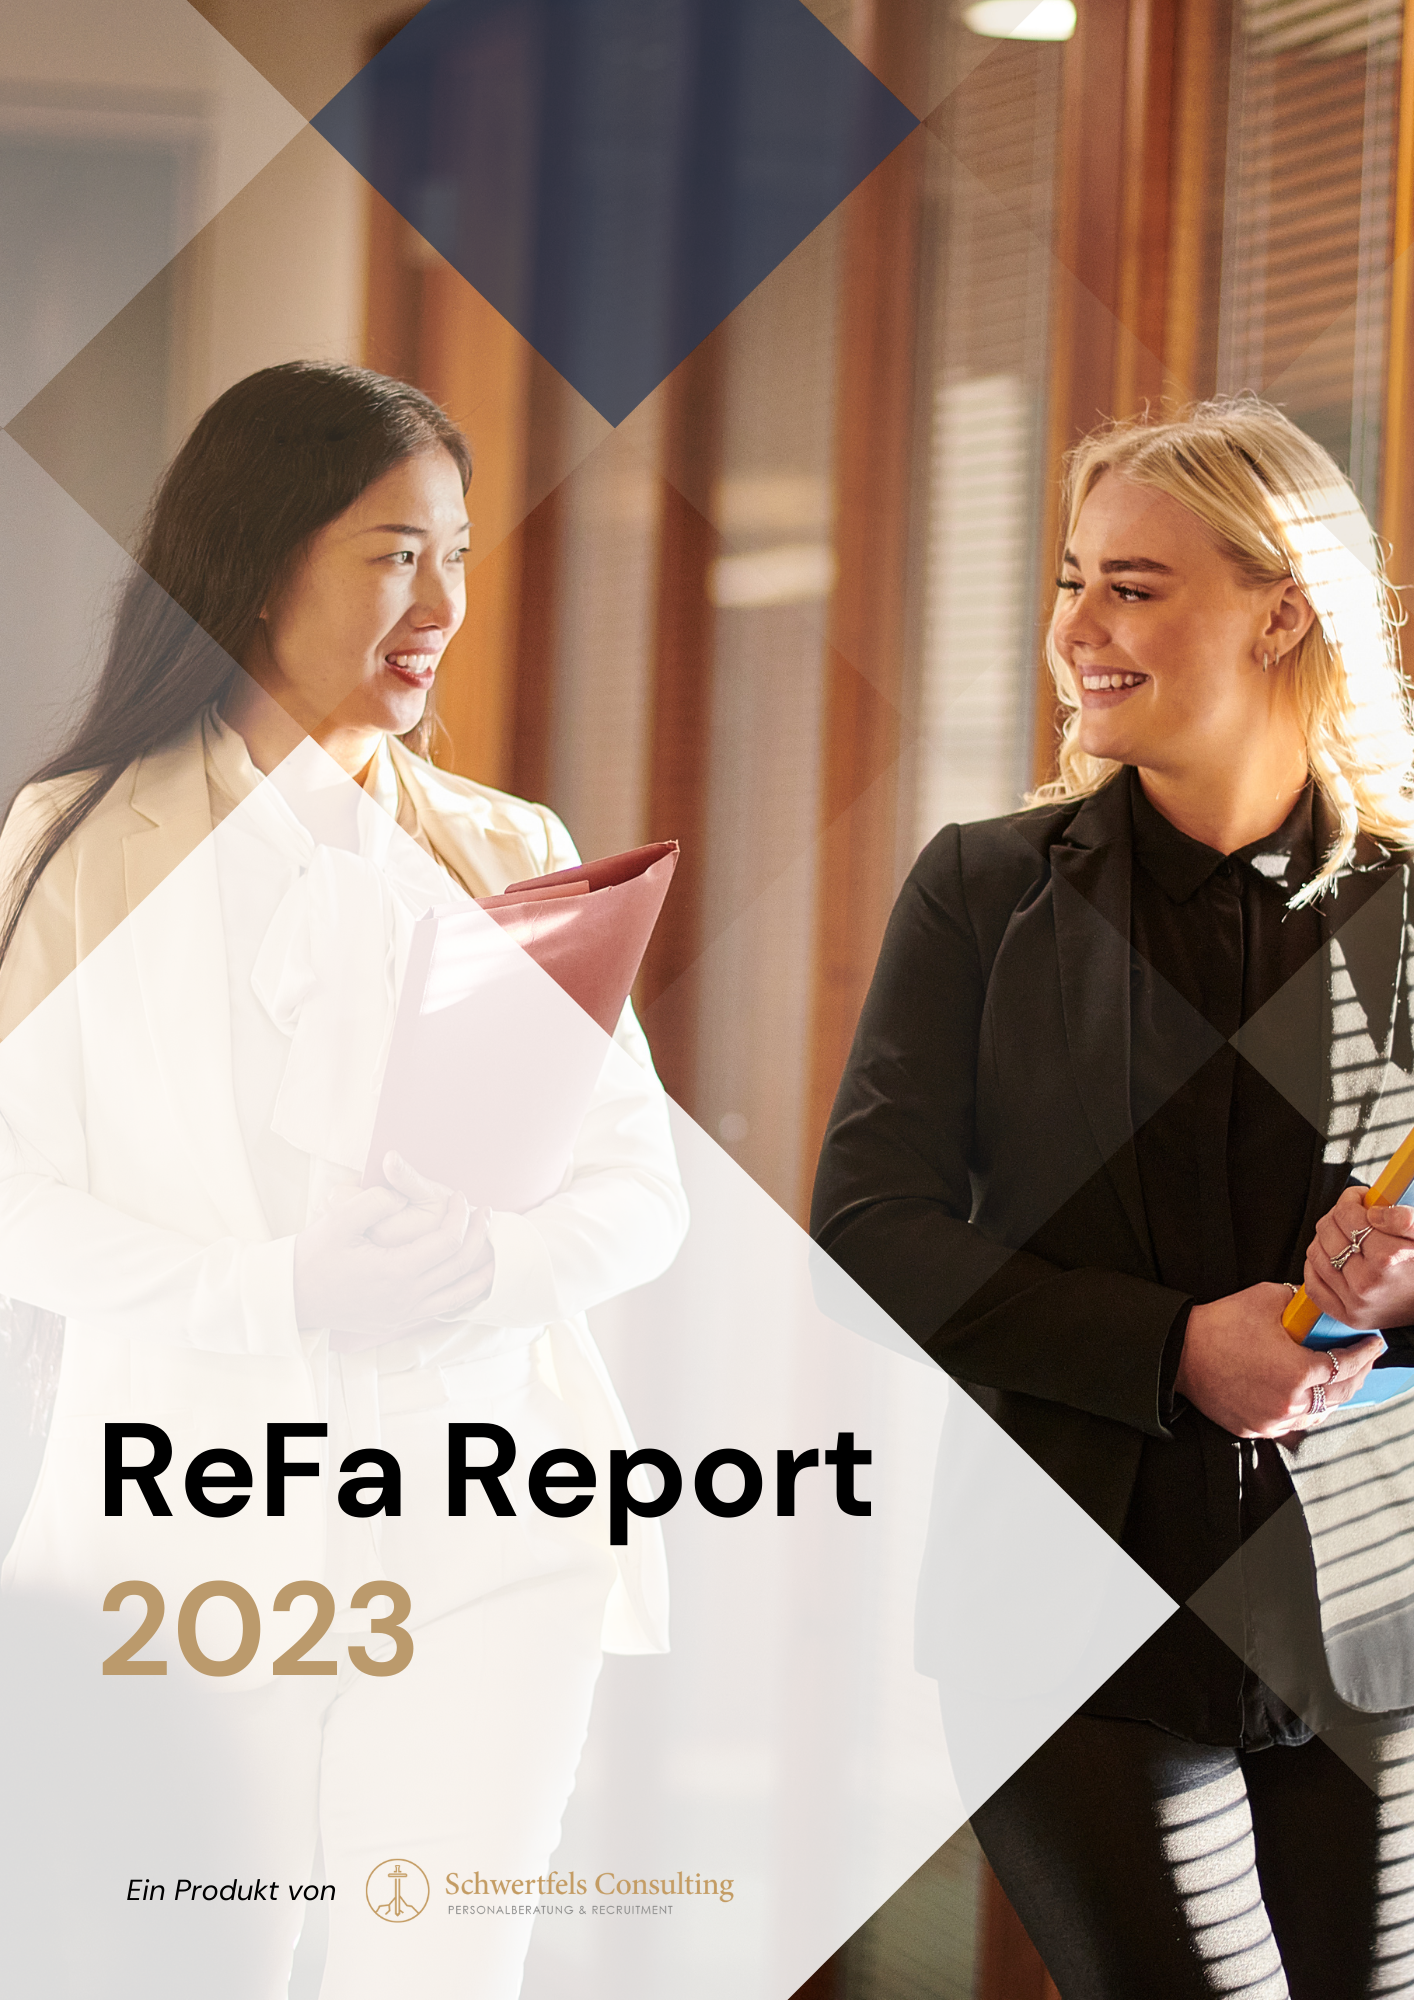 ReFa Report 2023